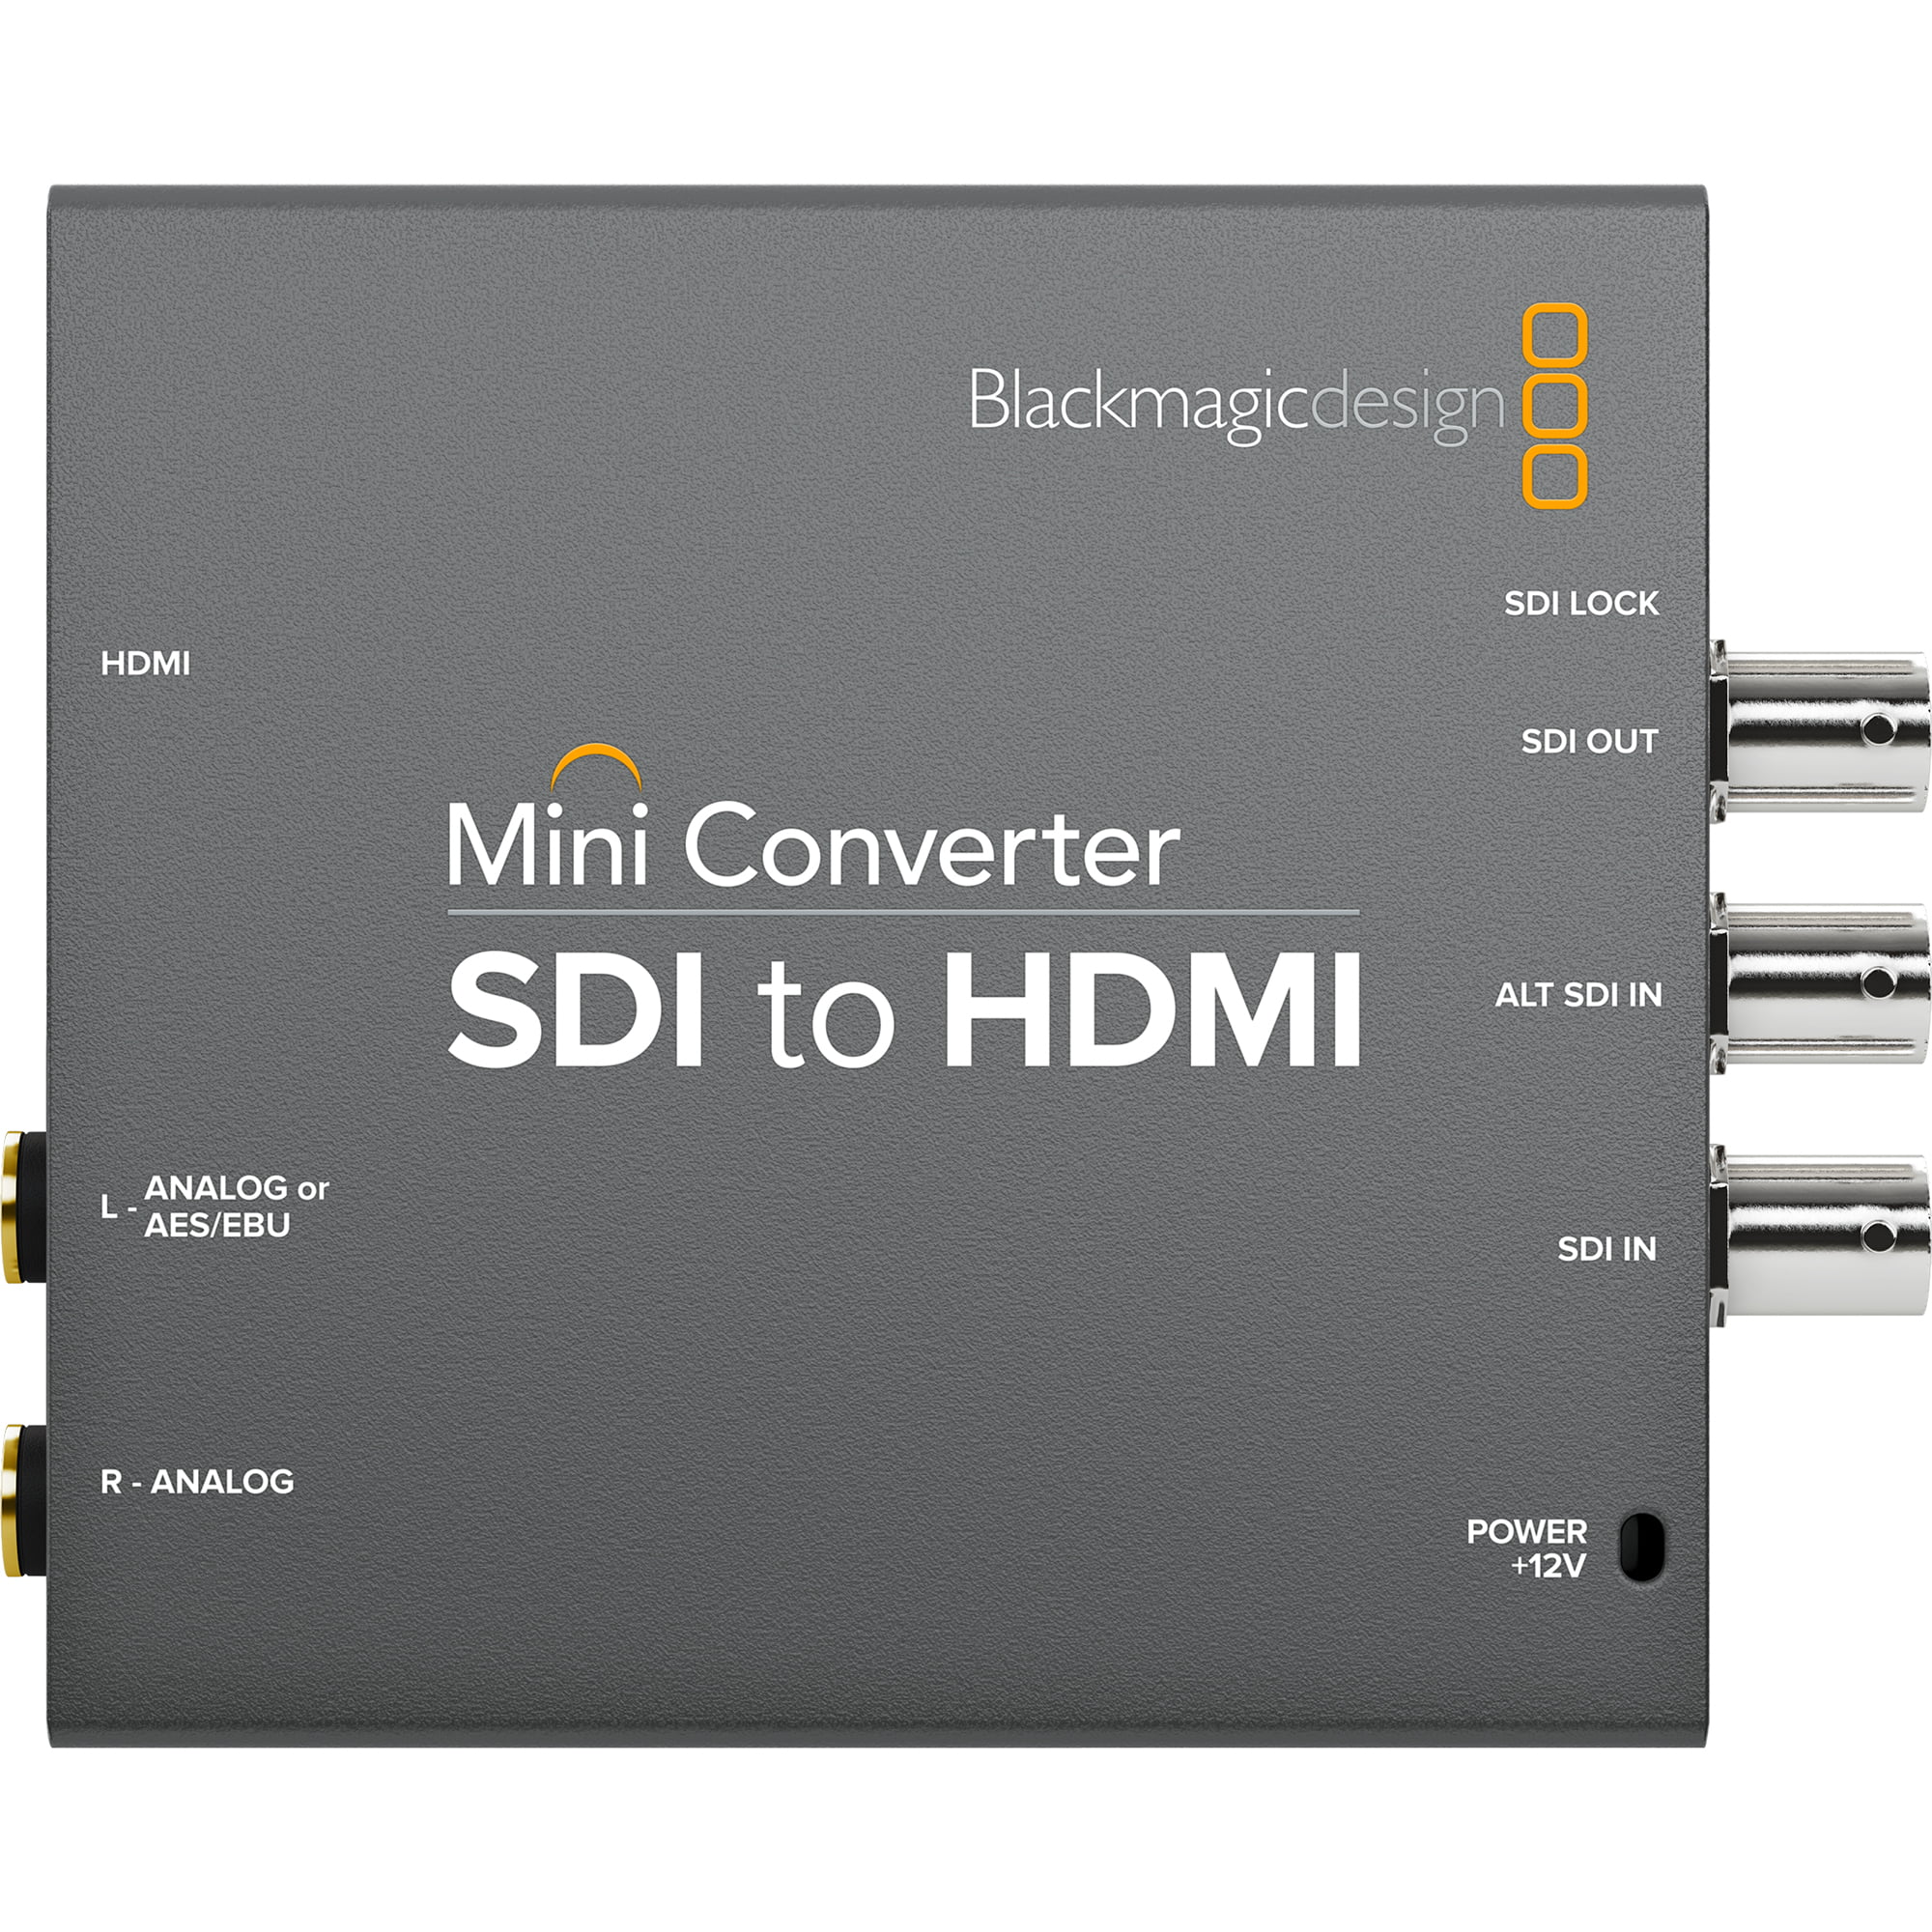 Blackmagic Design BlackMagic Design Mini Convertor SDI to HDMI SKU#985811 